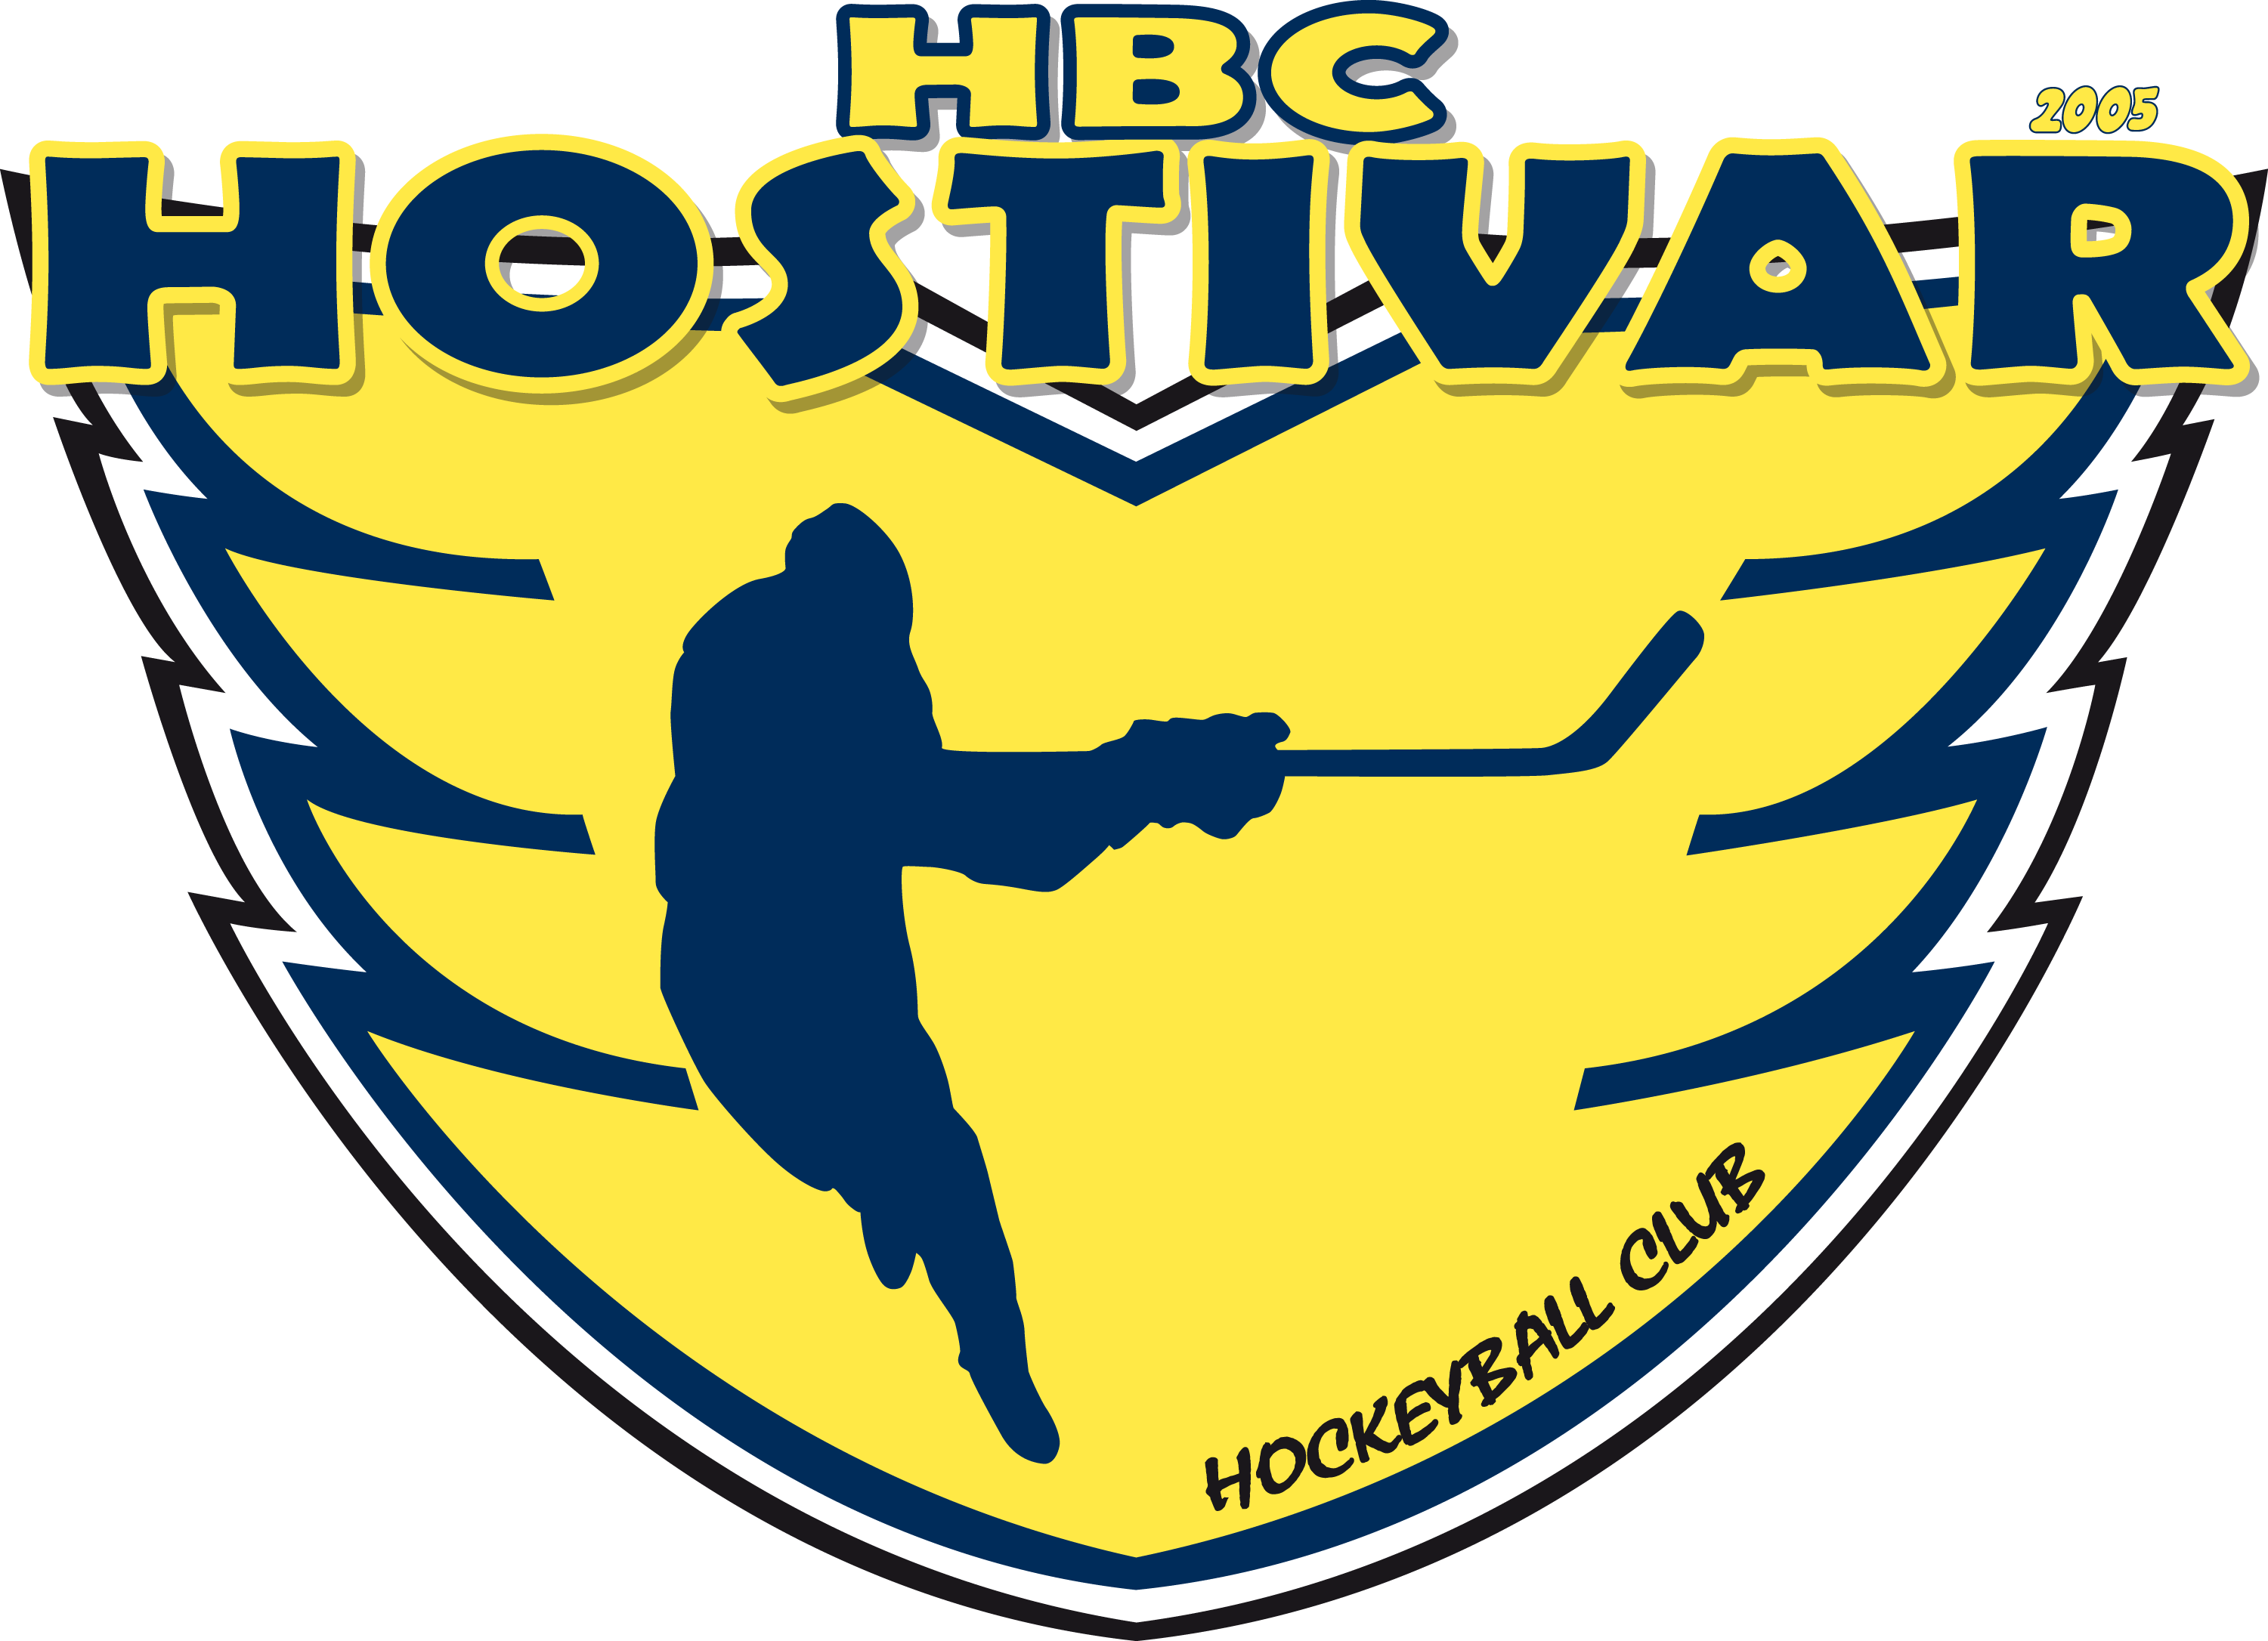 HBC Hostiva